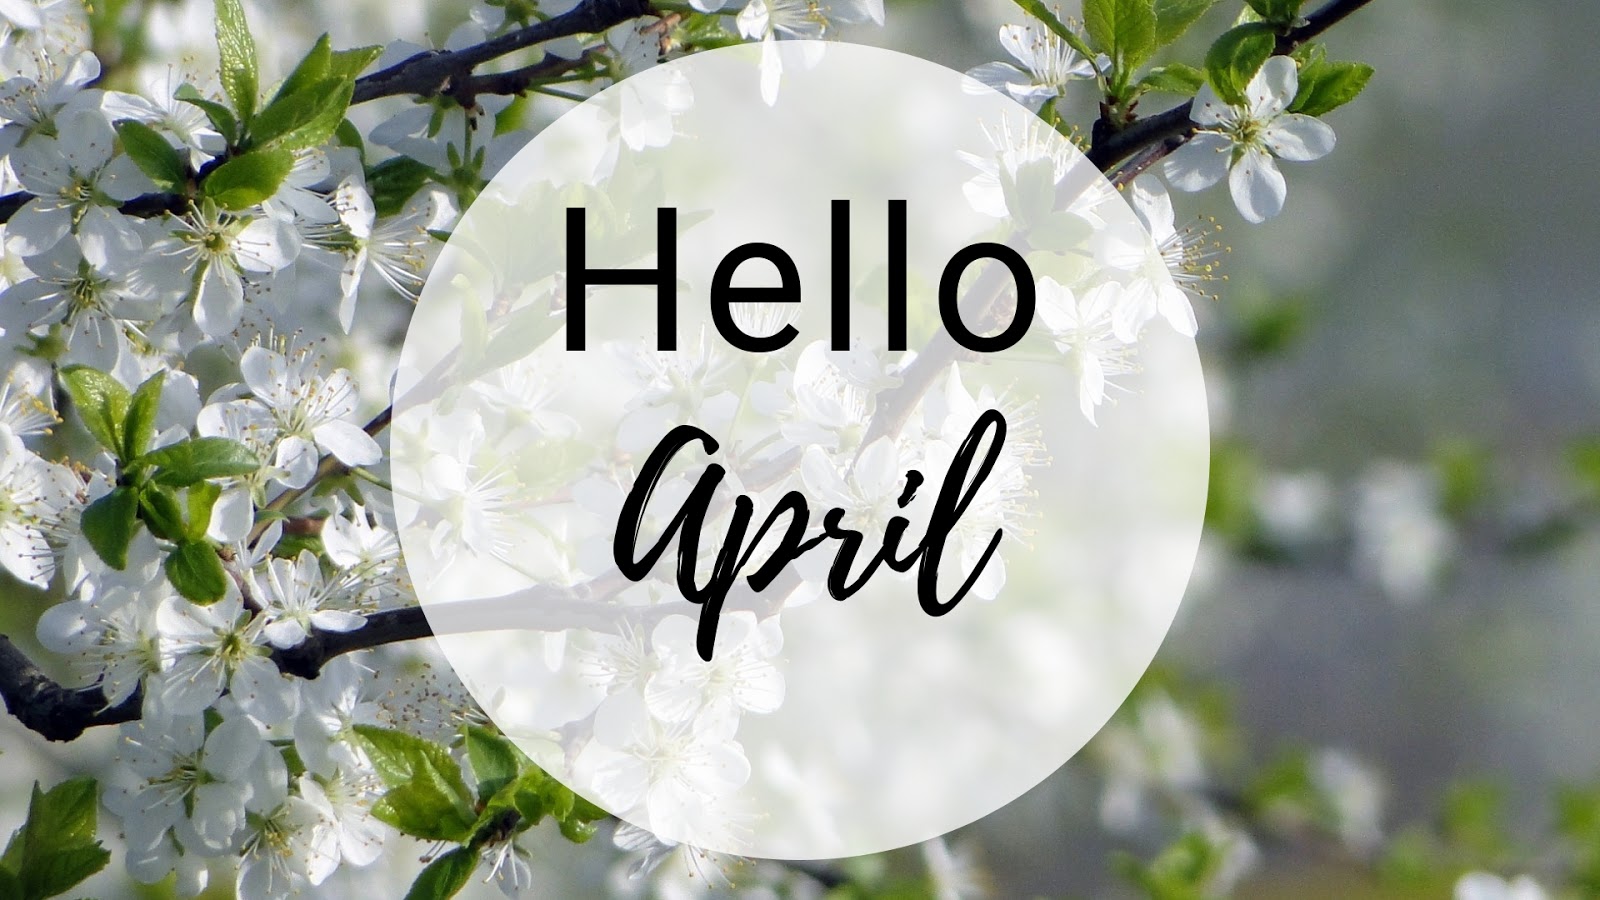 Hello content. Привет апрель. Hello март. Привет март надпись. Hello апрель картинки.